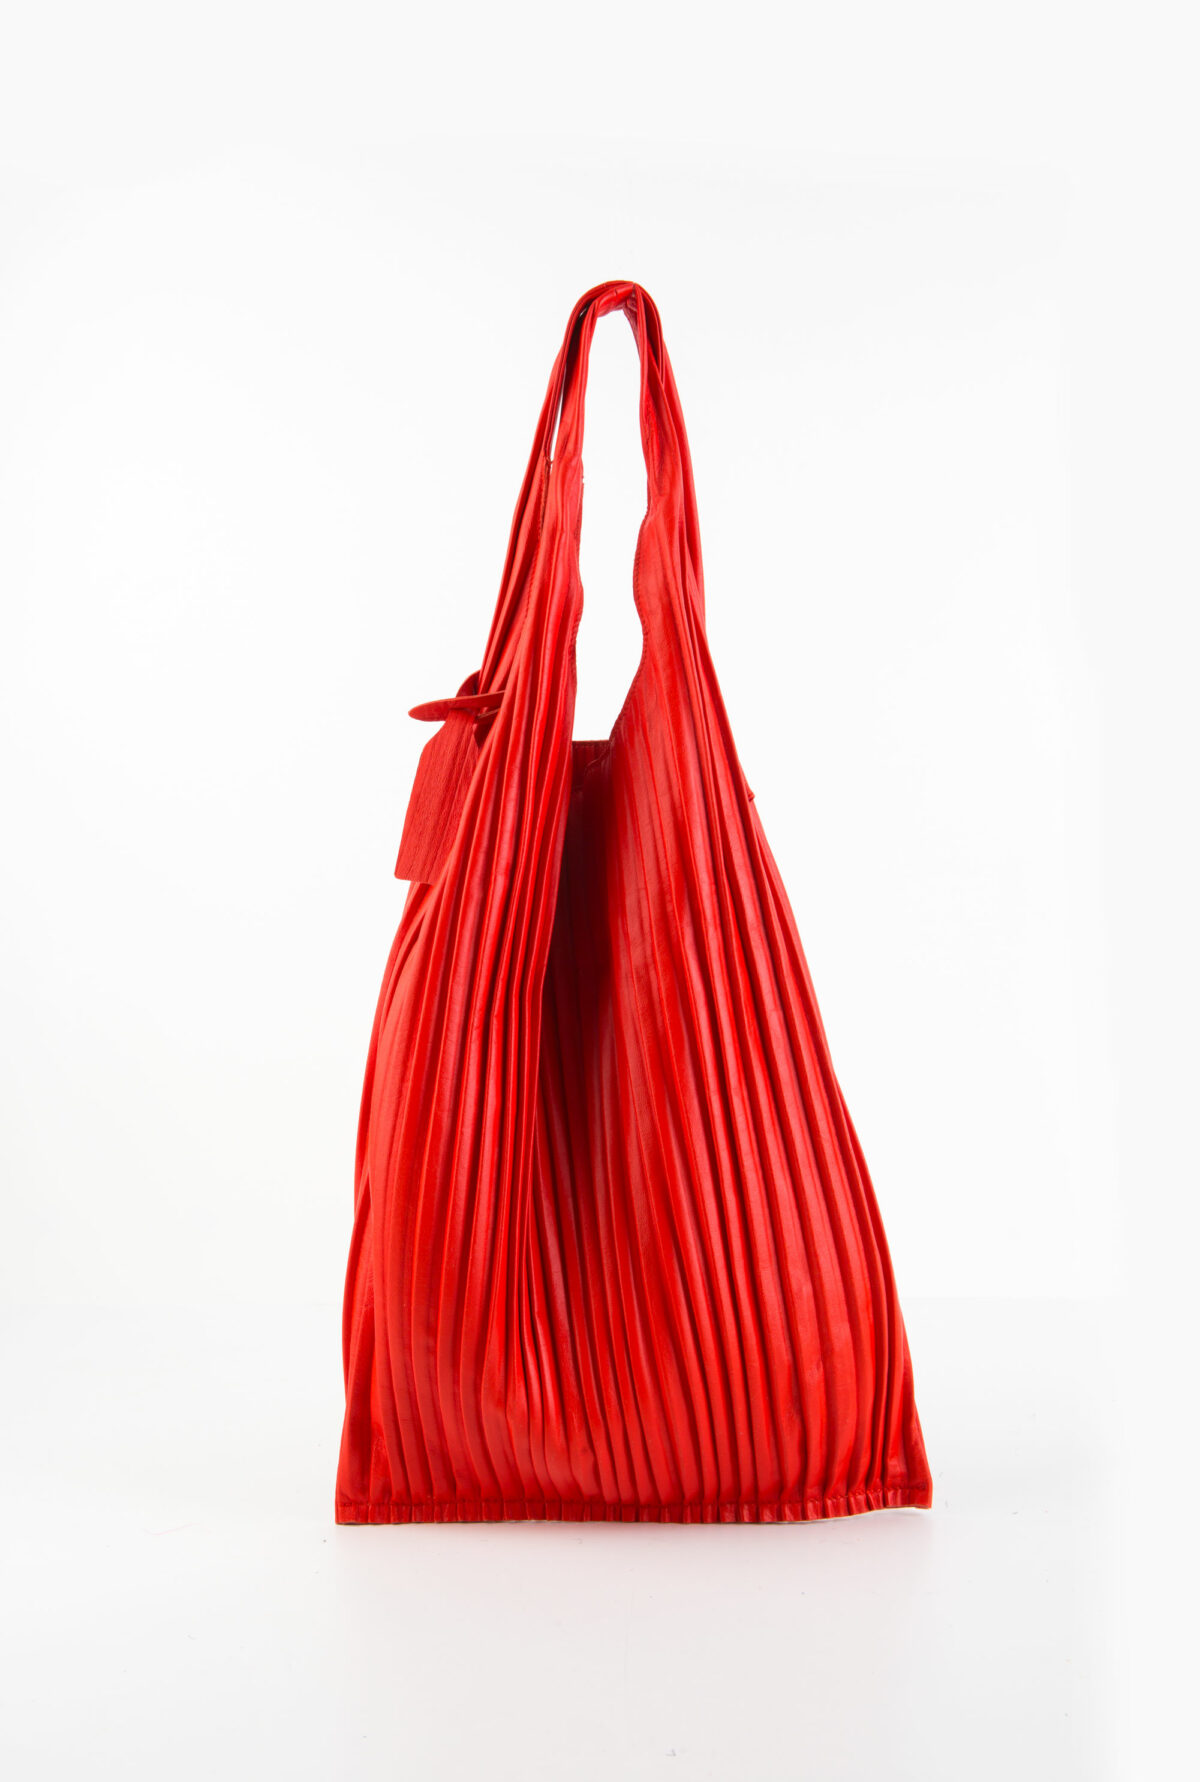 picasso-plisse-red-pleated-bag-leather-anita-bilardi-matchboxathens